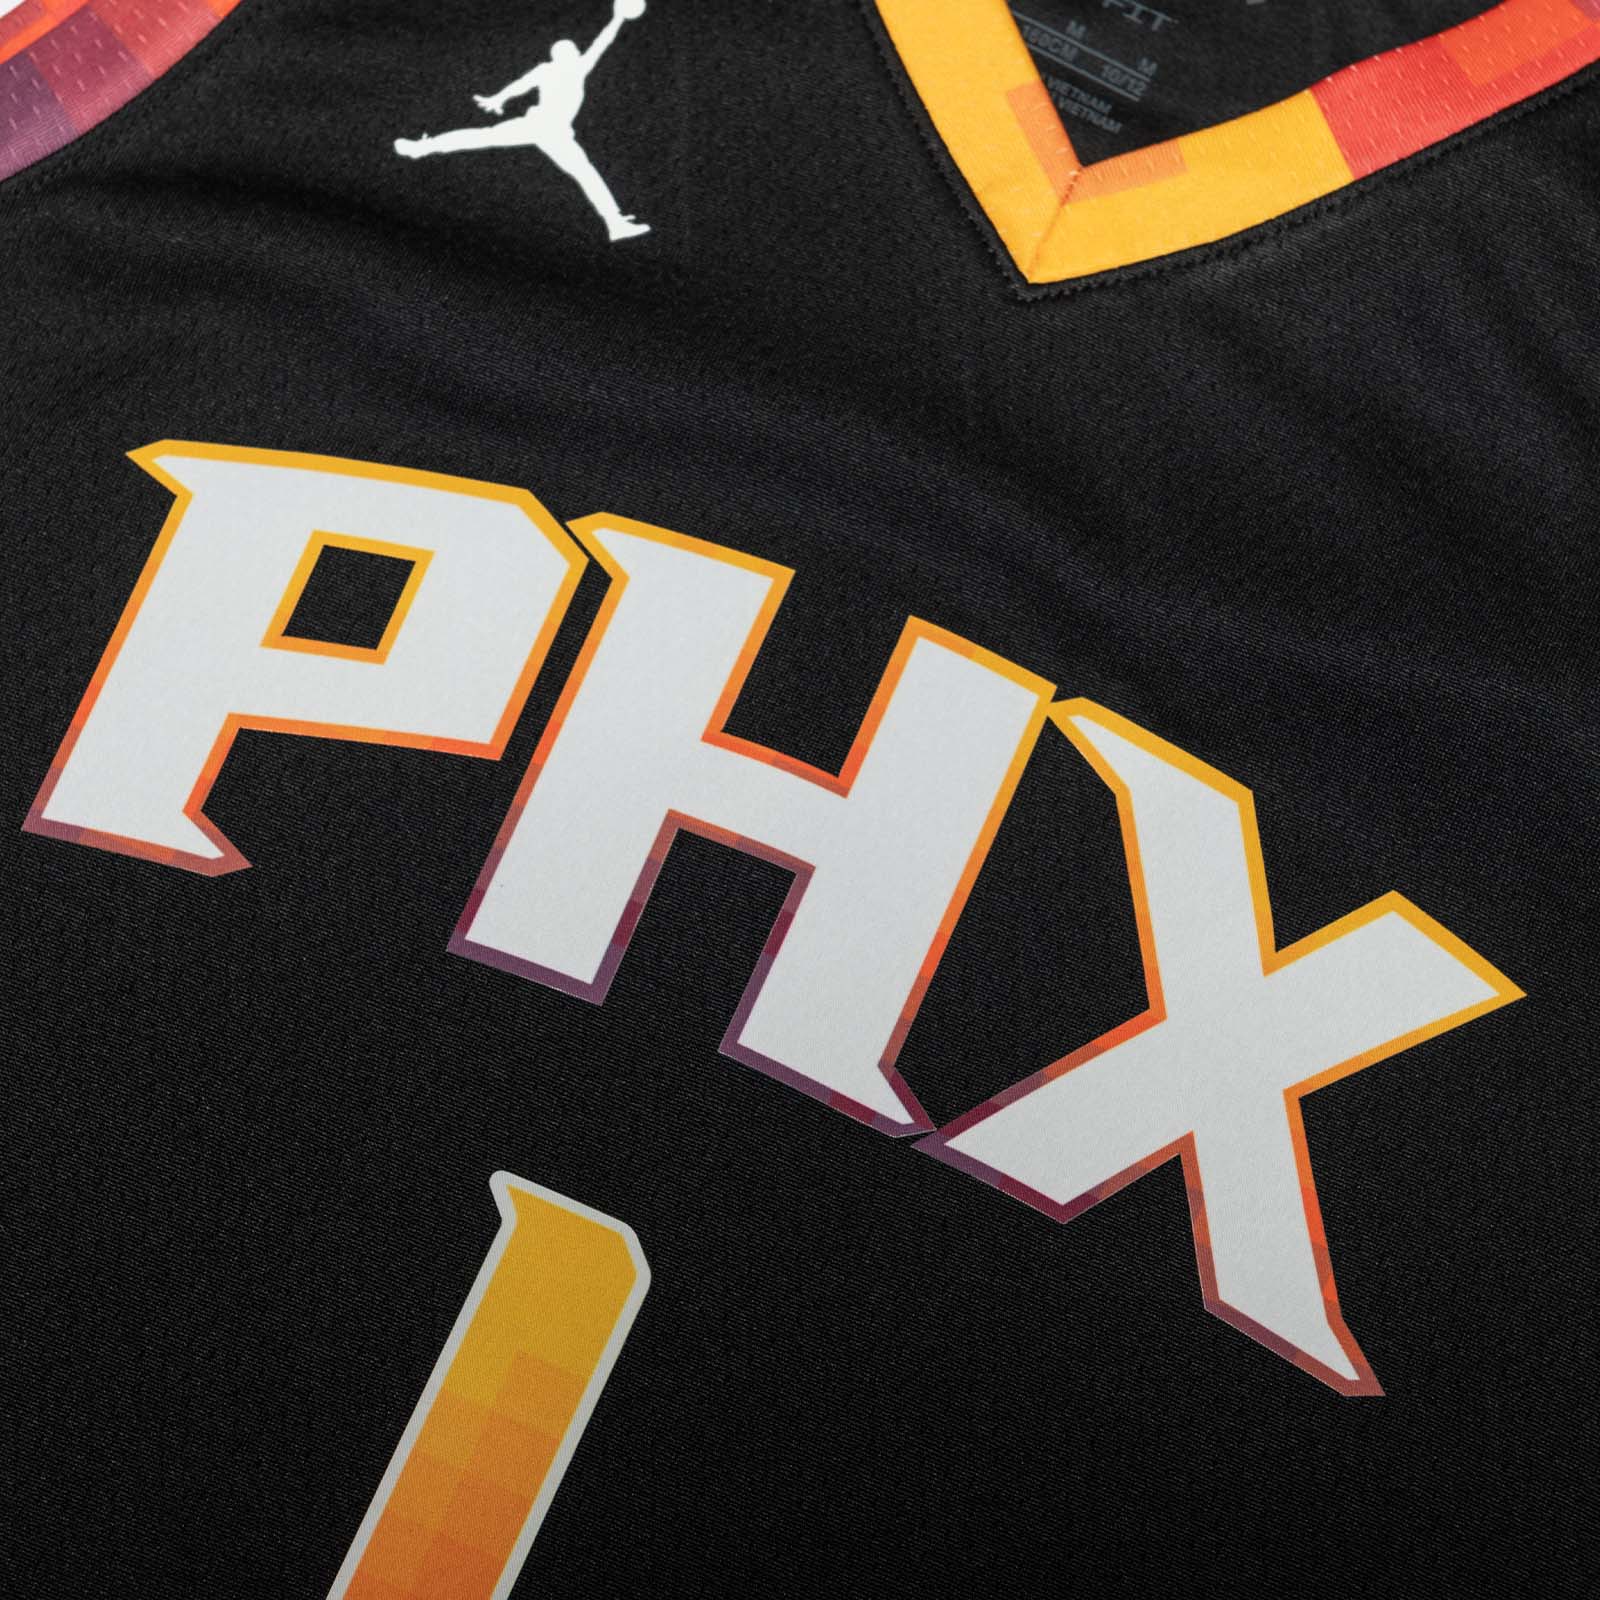 Devin Booker Phoenix Suns Icon Edition Swingman Jersey - Purple - Throwback